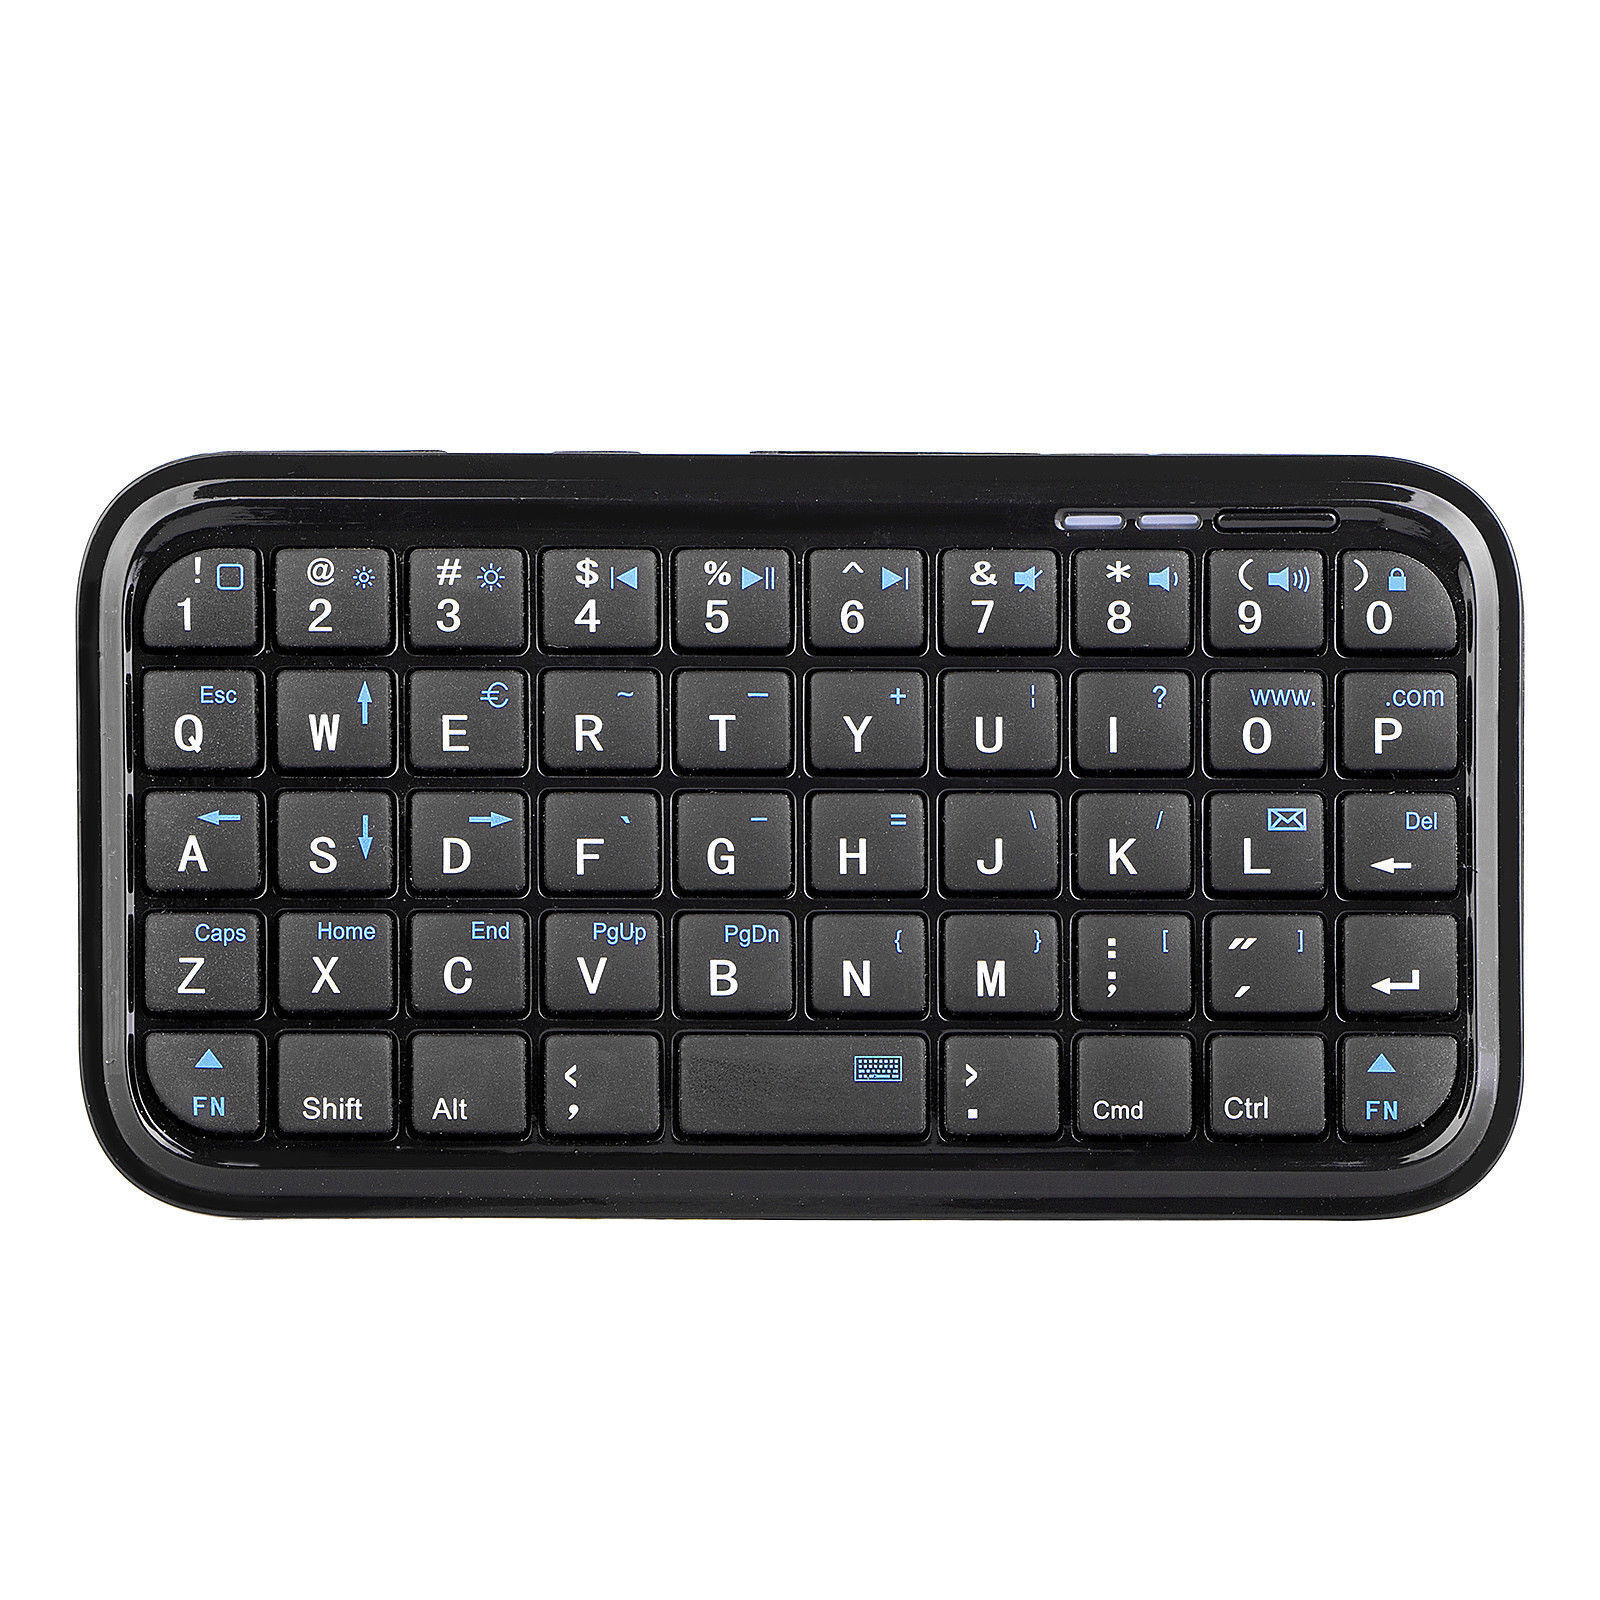 Bluetooth Keyboard Pocket Size for Smart Phone Slim Rechargeable Wireless Keypad